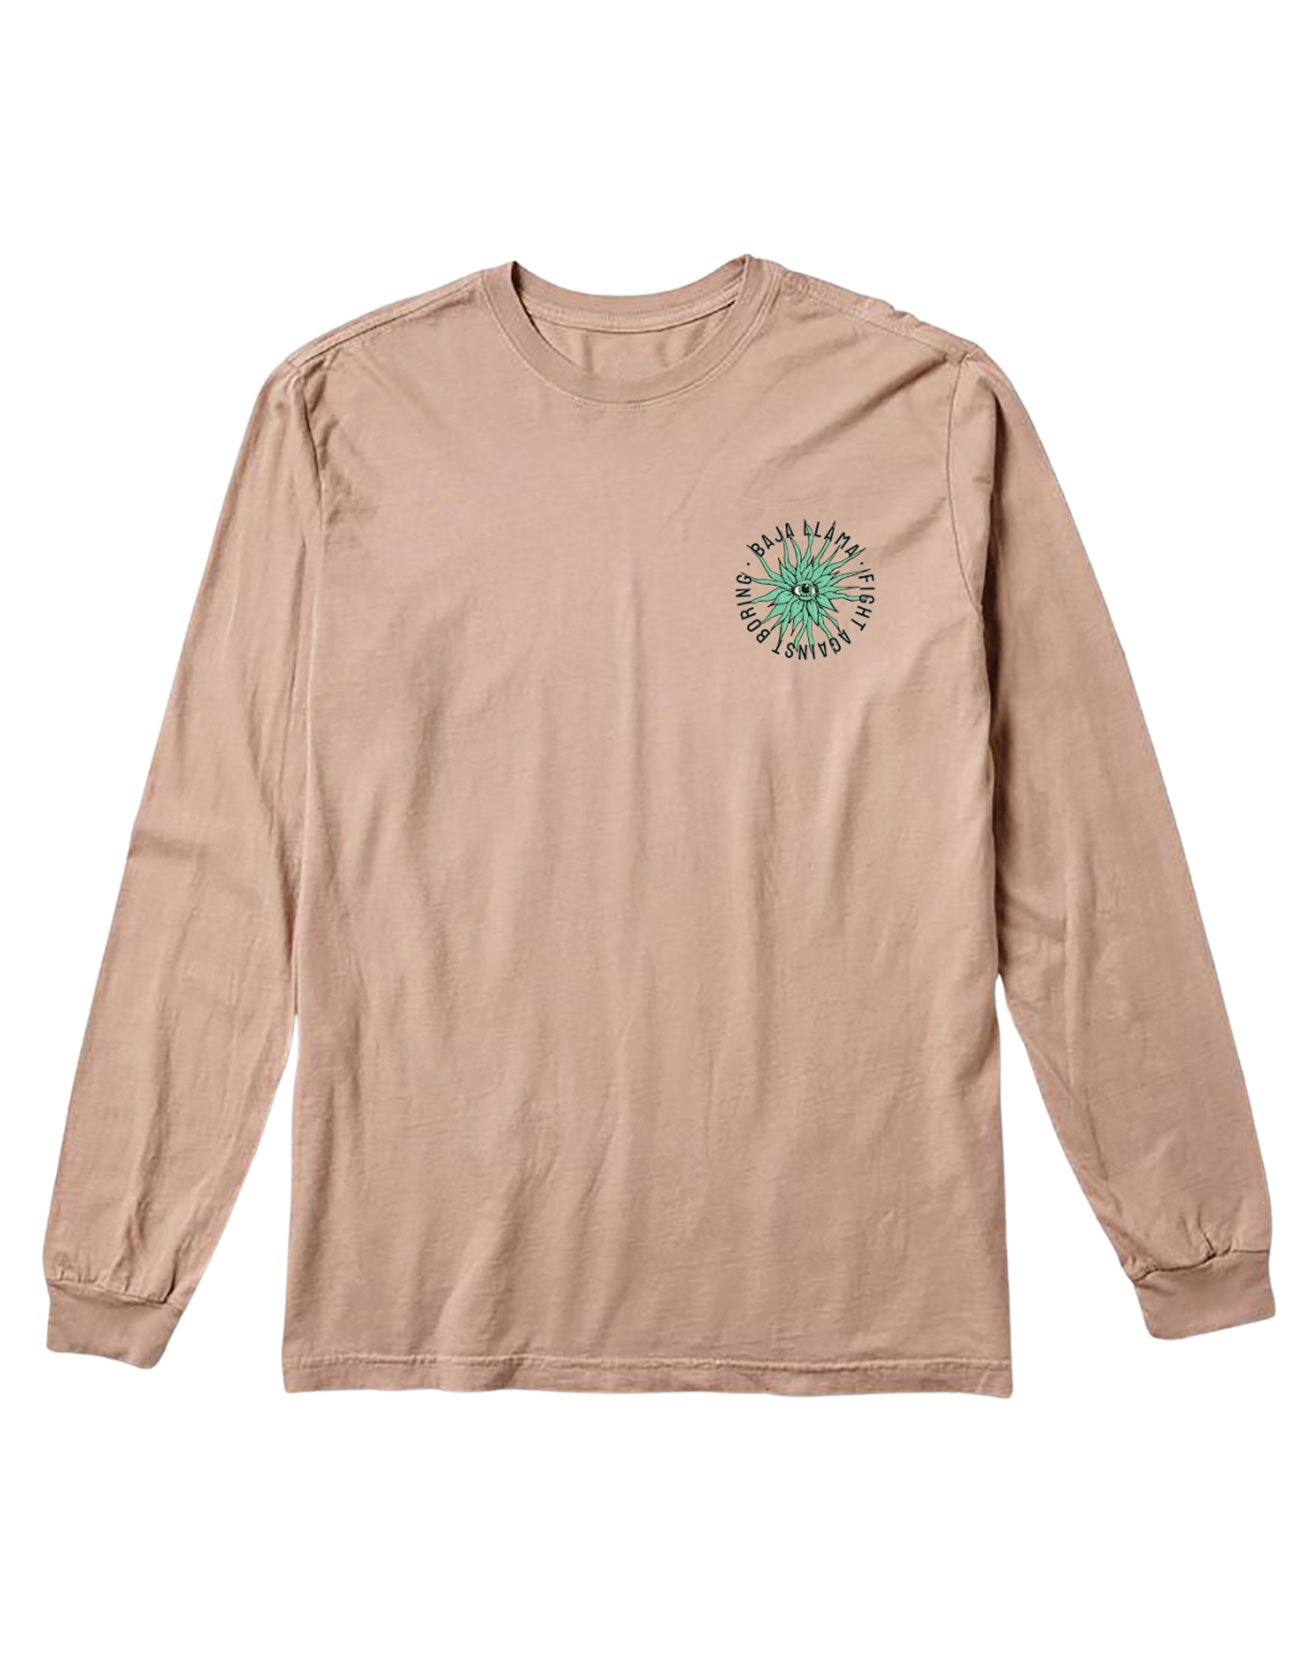 Baja Llama champagne and green succulent print peruvian cotton graphic t-shirt